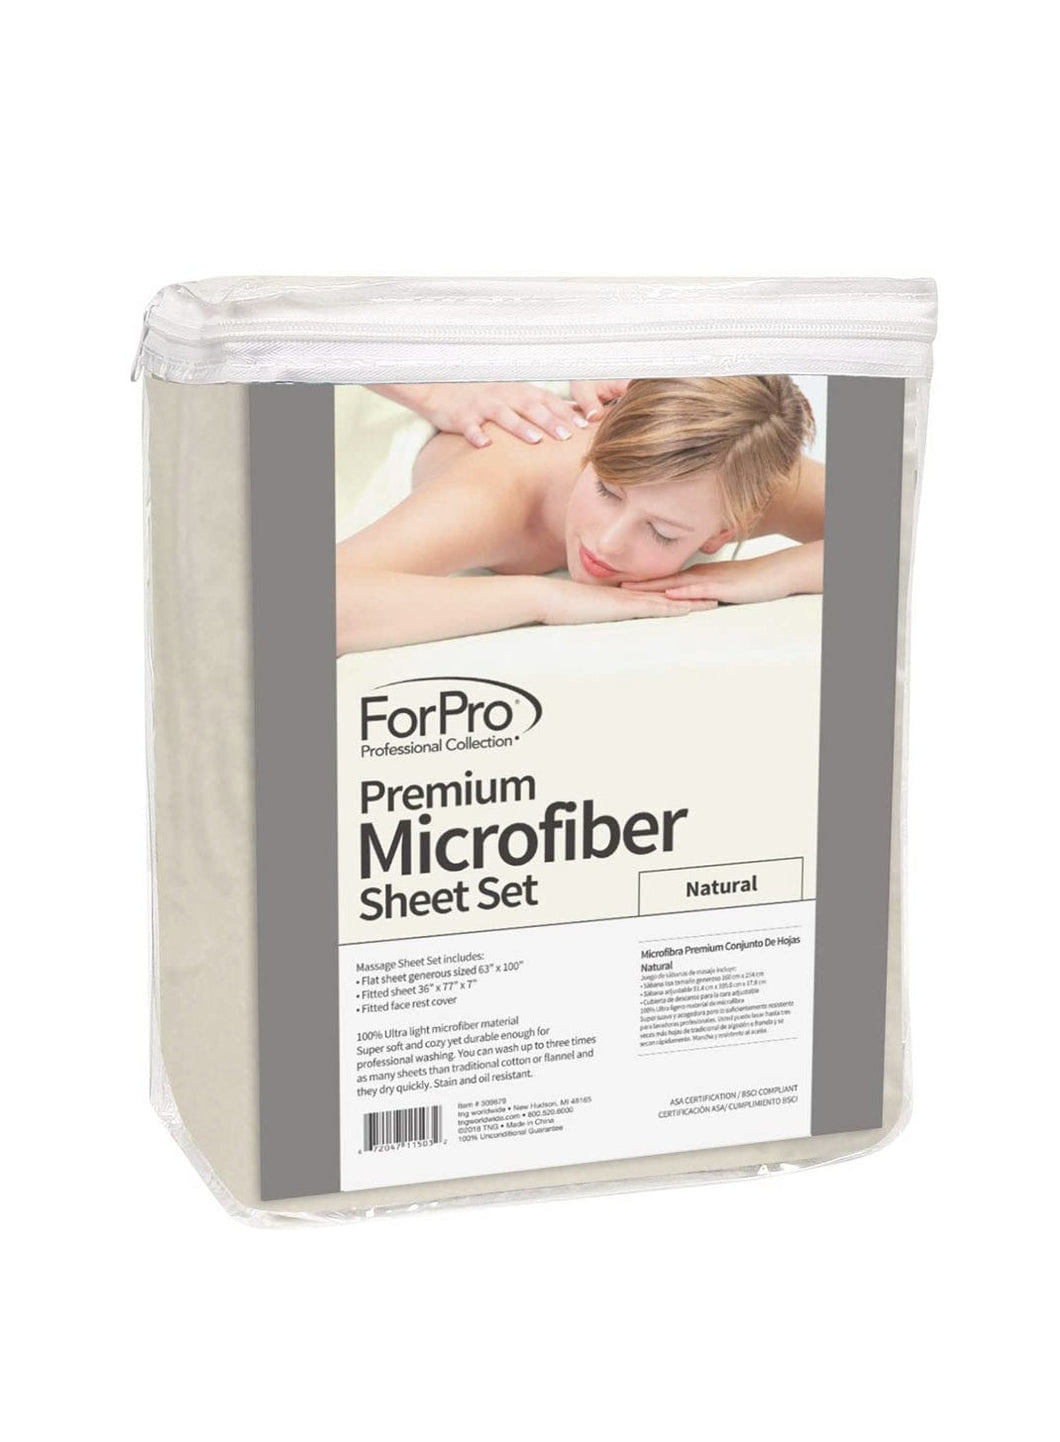 Microfiber 3pc Massage Bed Sheet Set (Natural)